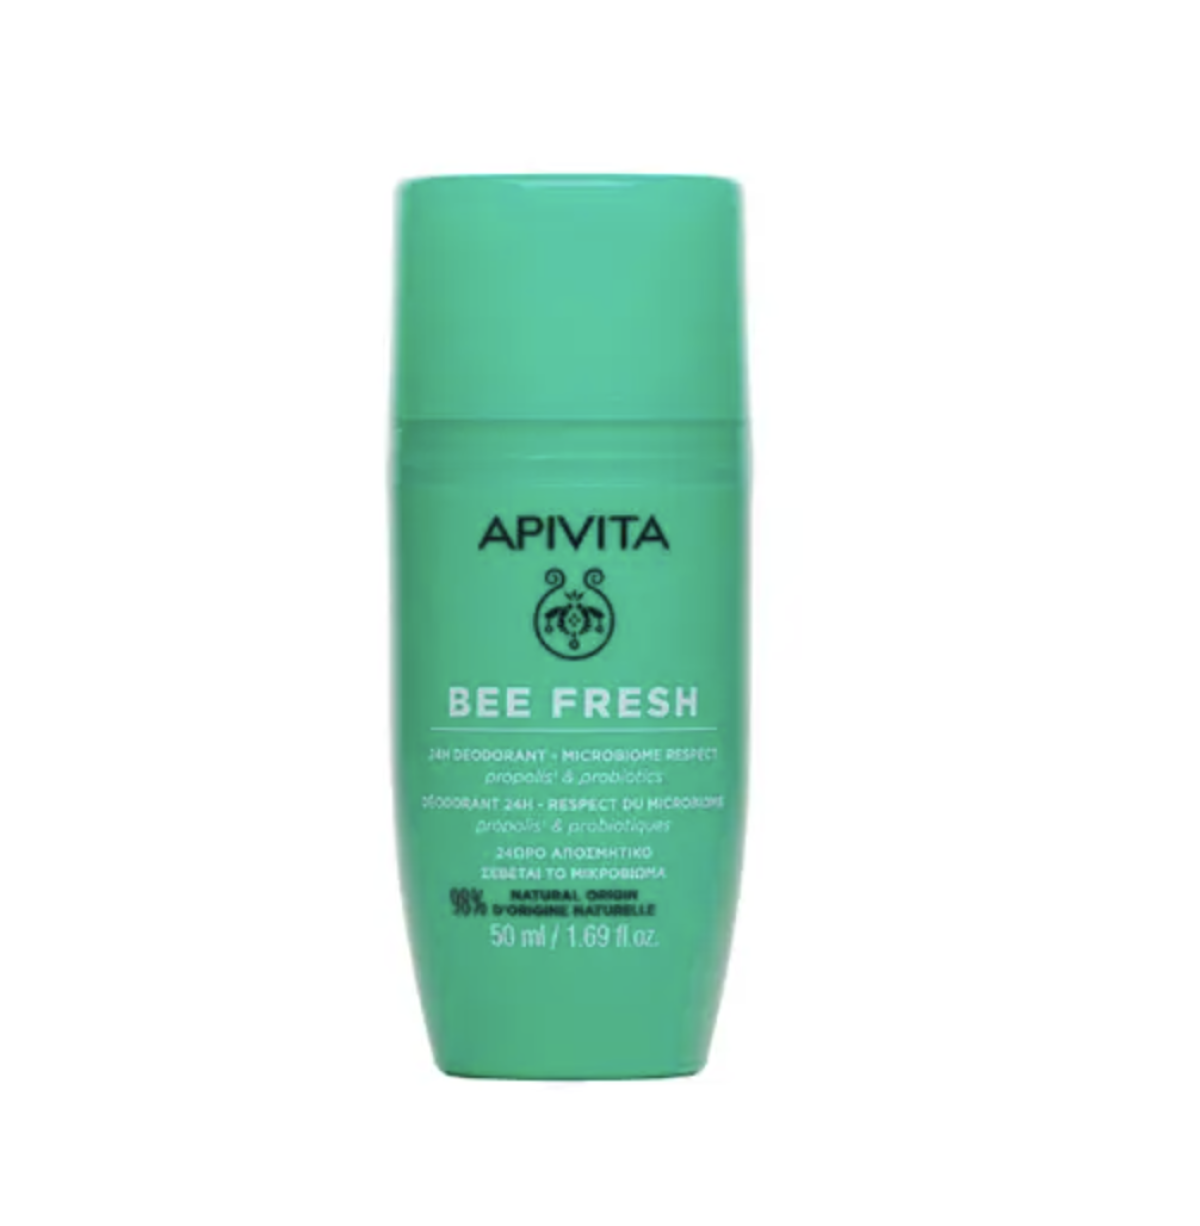 APIVITA Bee Fresh 24h Deodorant Microbiome Respect